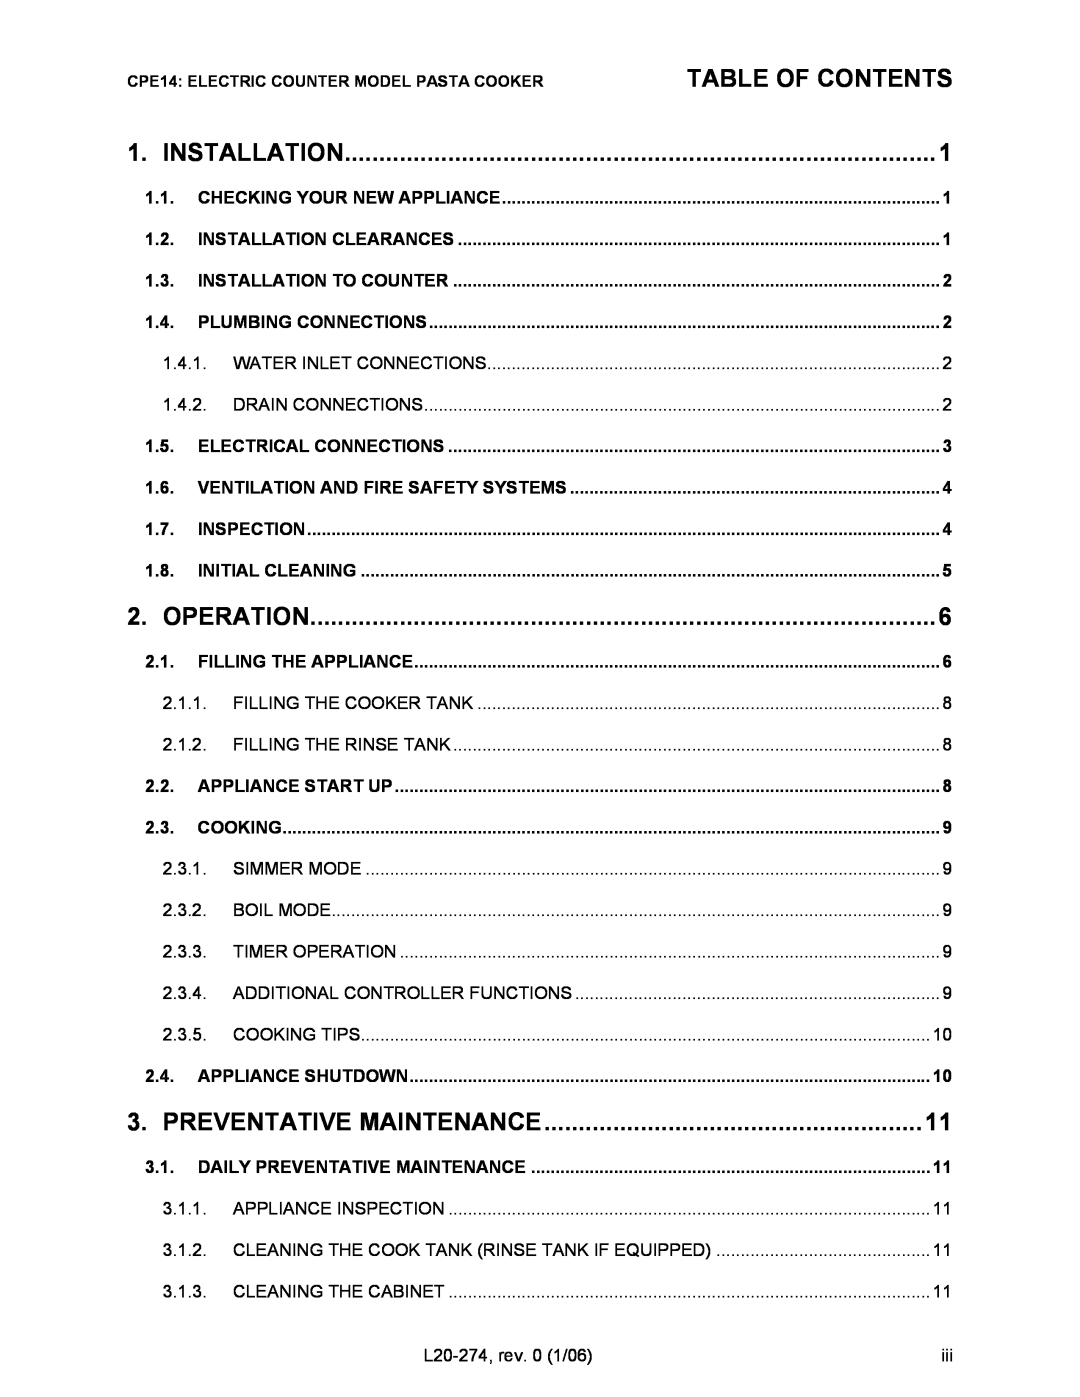 Pitco Frialator RSCPE14 operation manual Table Of Contents, Preventative Maintenance 